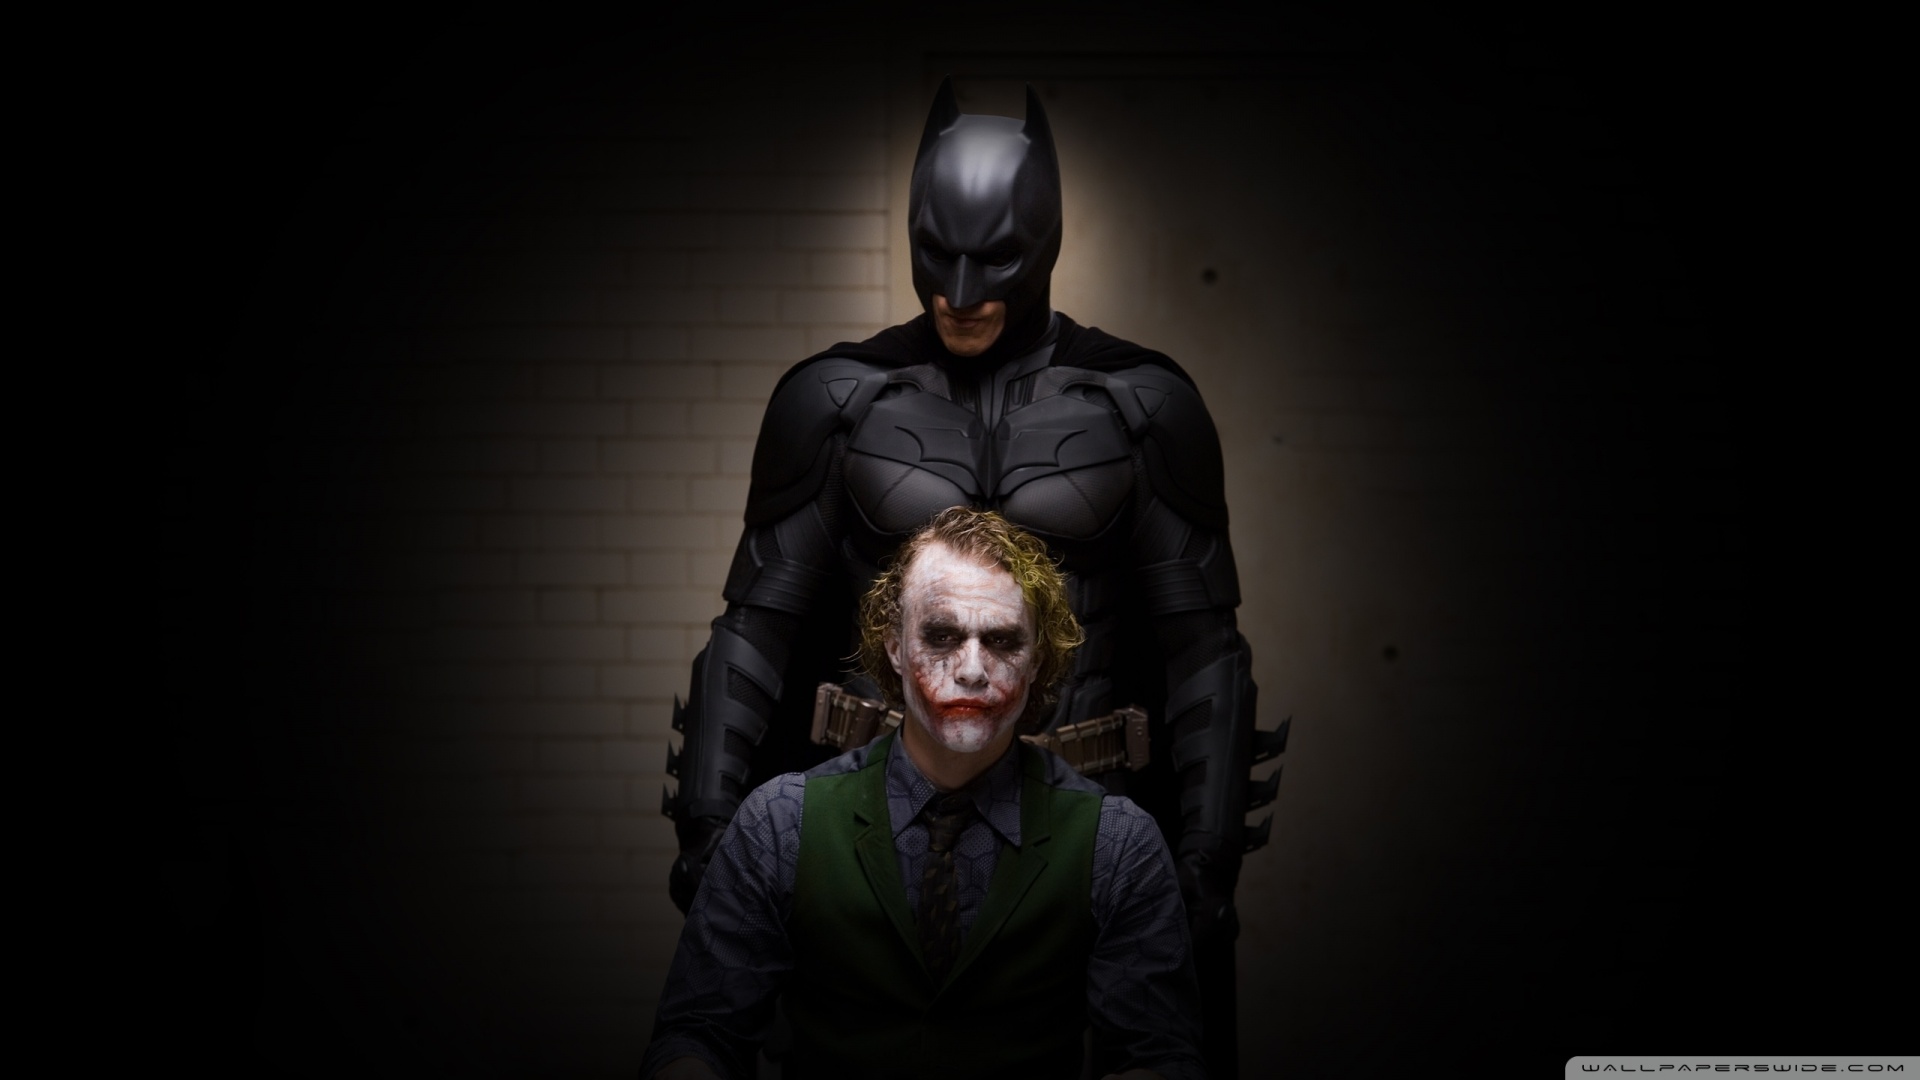 46] Joker and Batman Wallpaper on WallpaperSafari 1920x1080